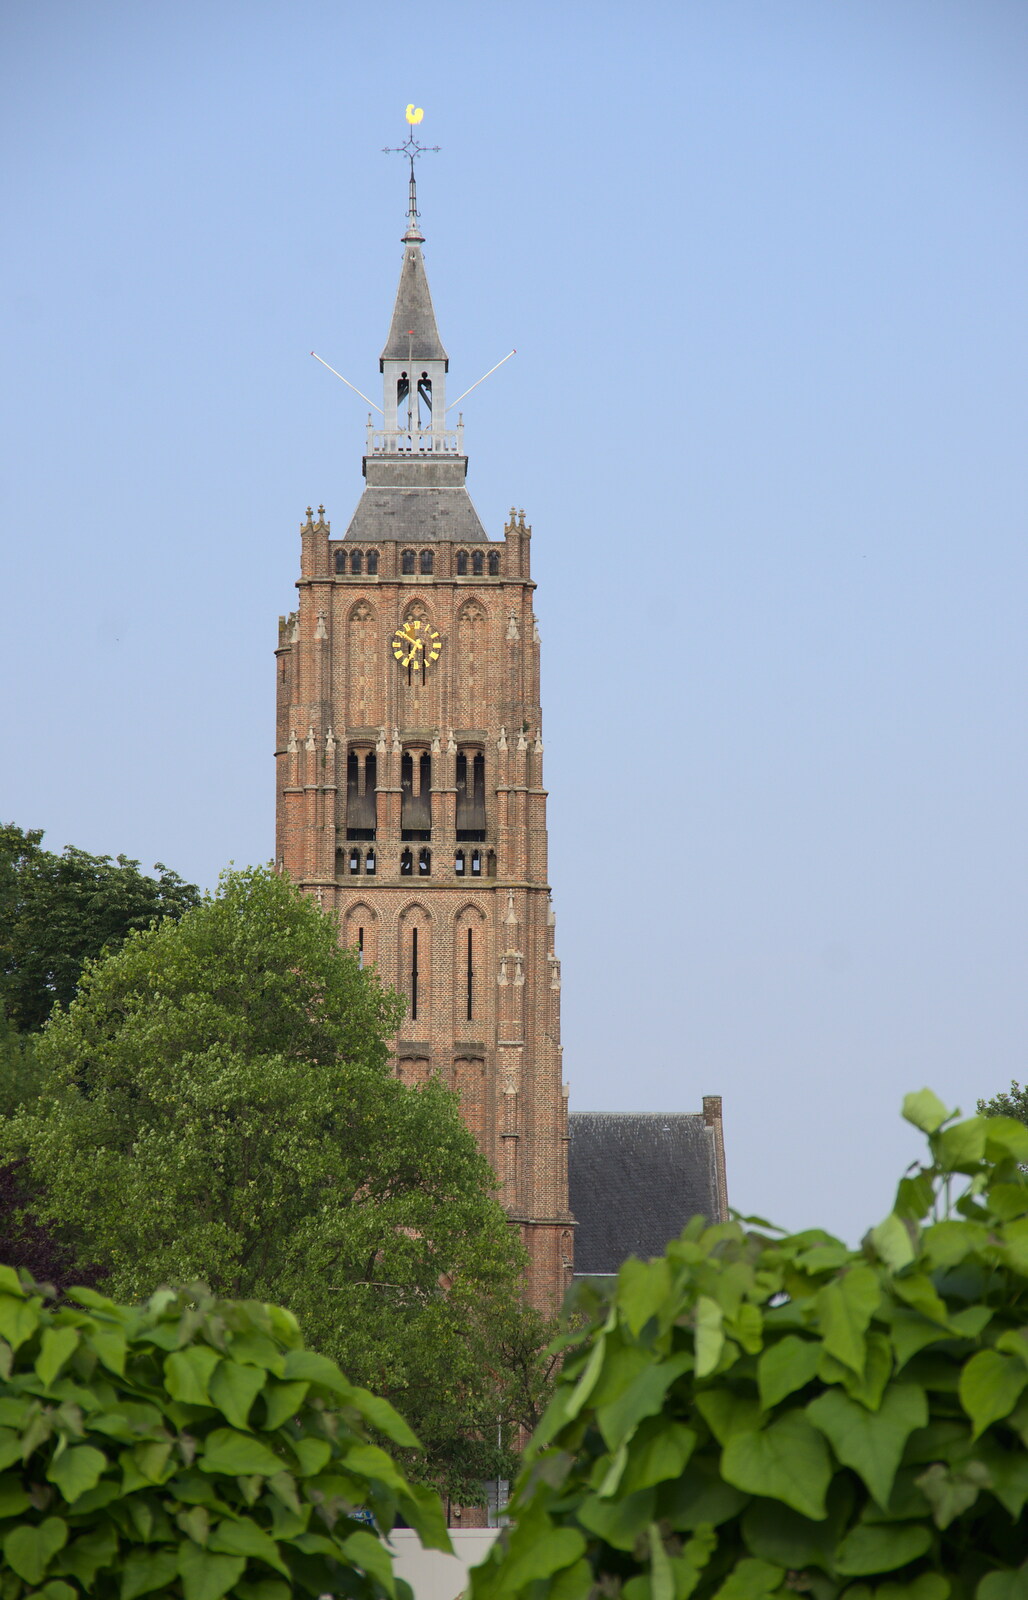 The tower of the Hervormde Kerk from A Postcard From Asperen, Gelderland, Netherlands - 9th June 2018